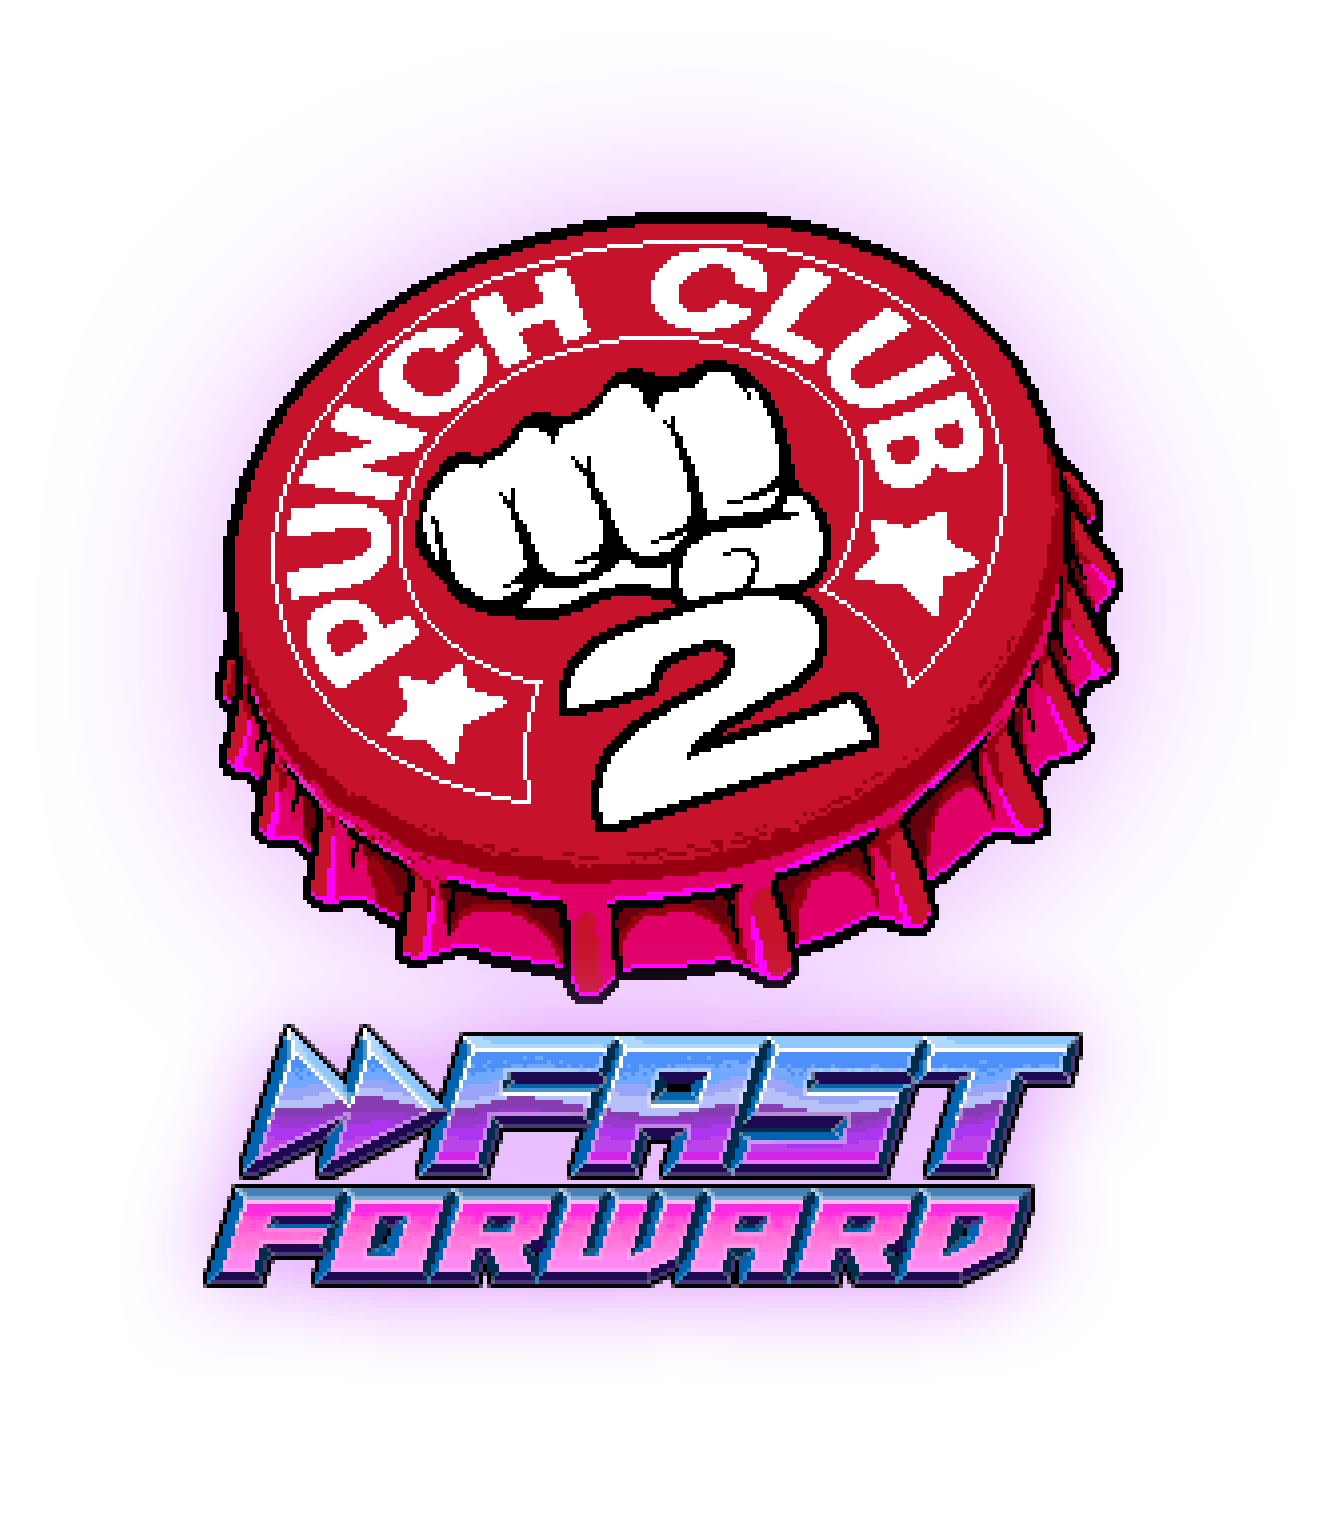 Punch club 2 fast. Панч клаб. Punch Club 2: fast forward. Punch Club fast forward. Punch Club 2 fast forward на андроид.